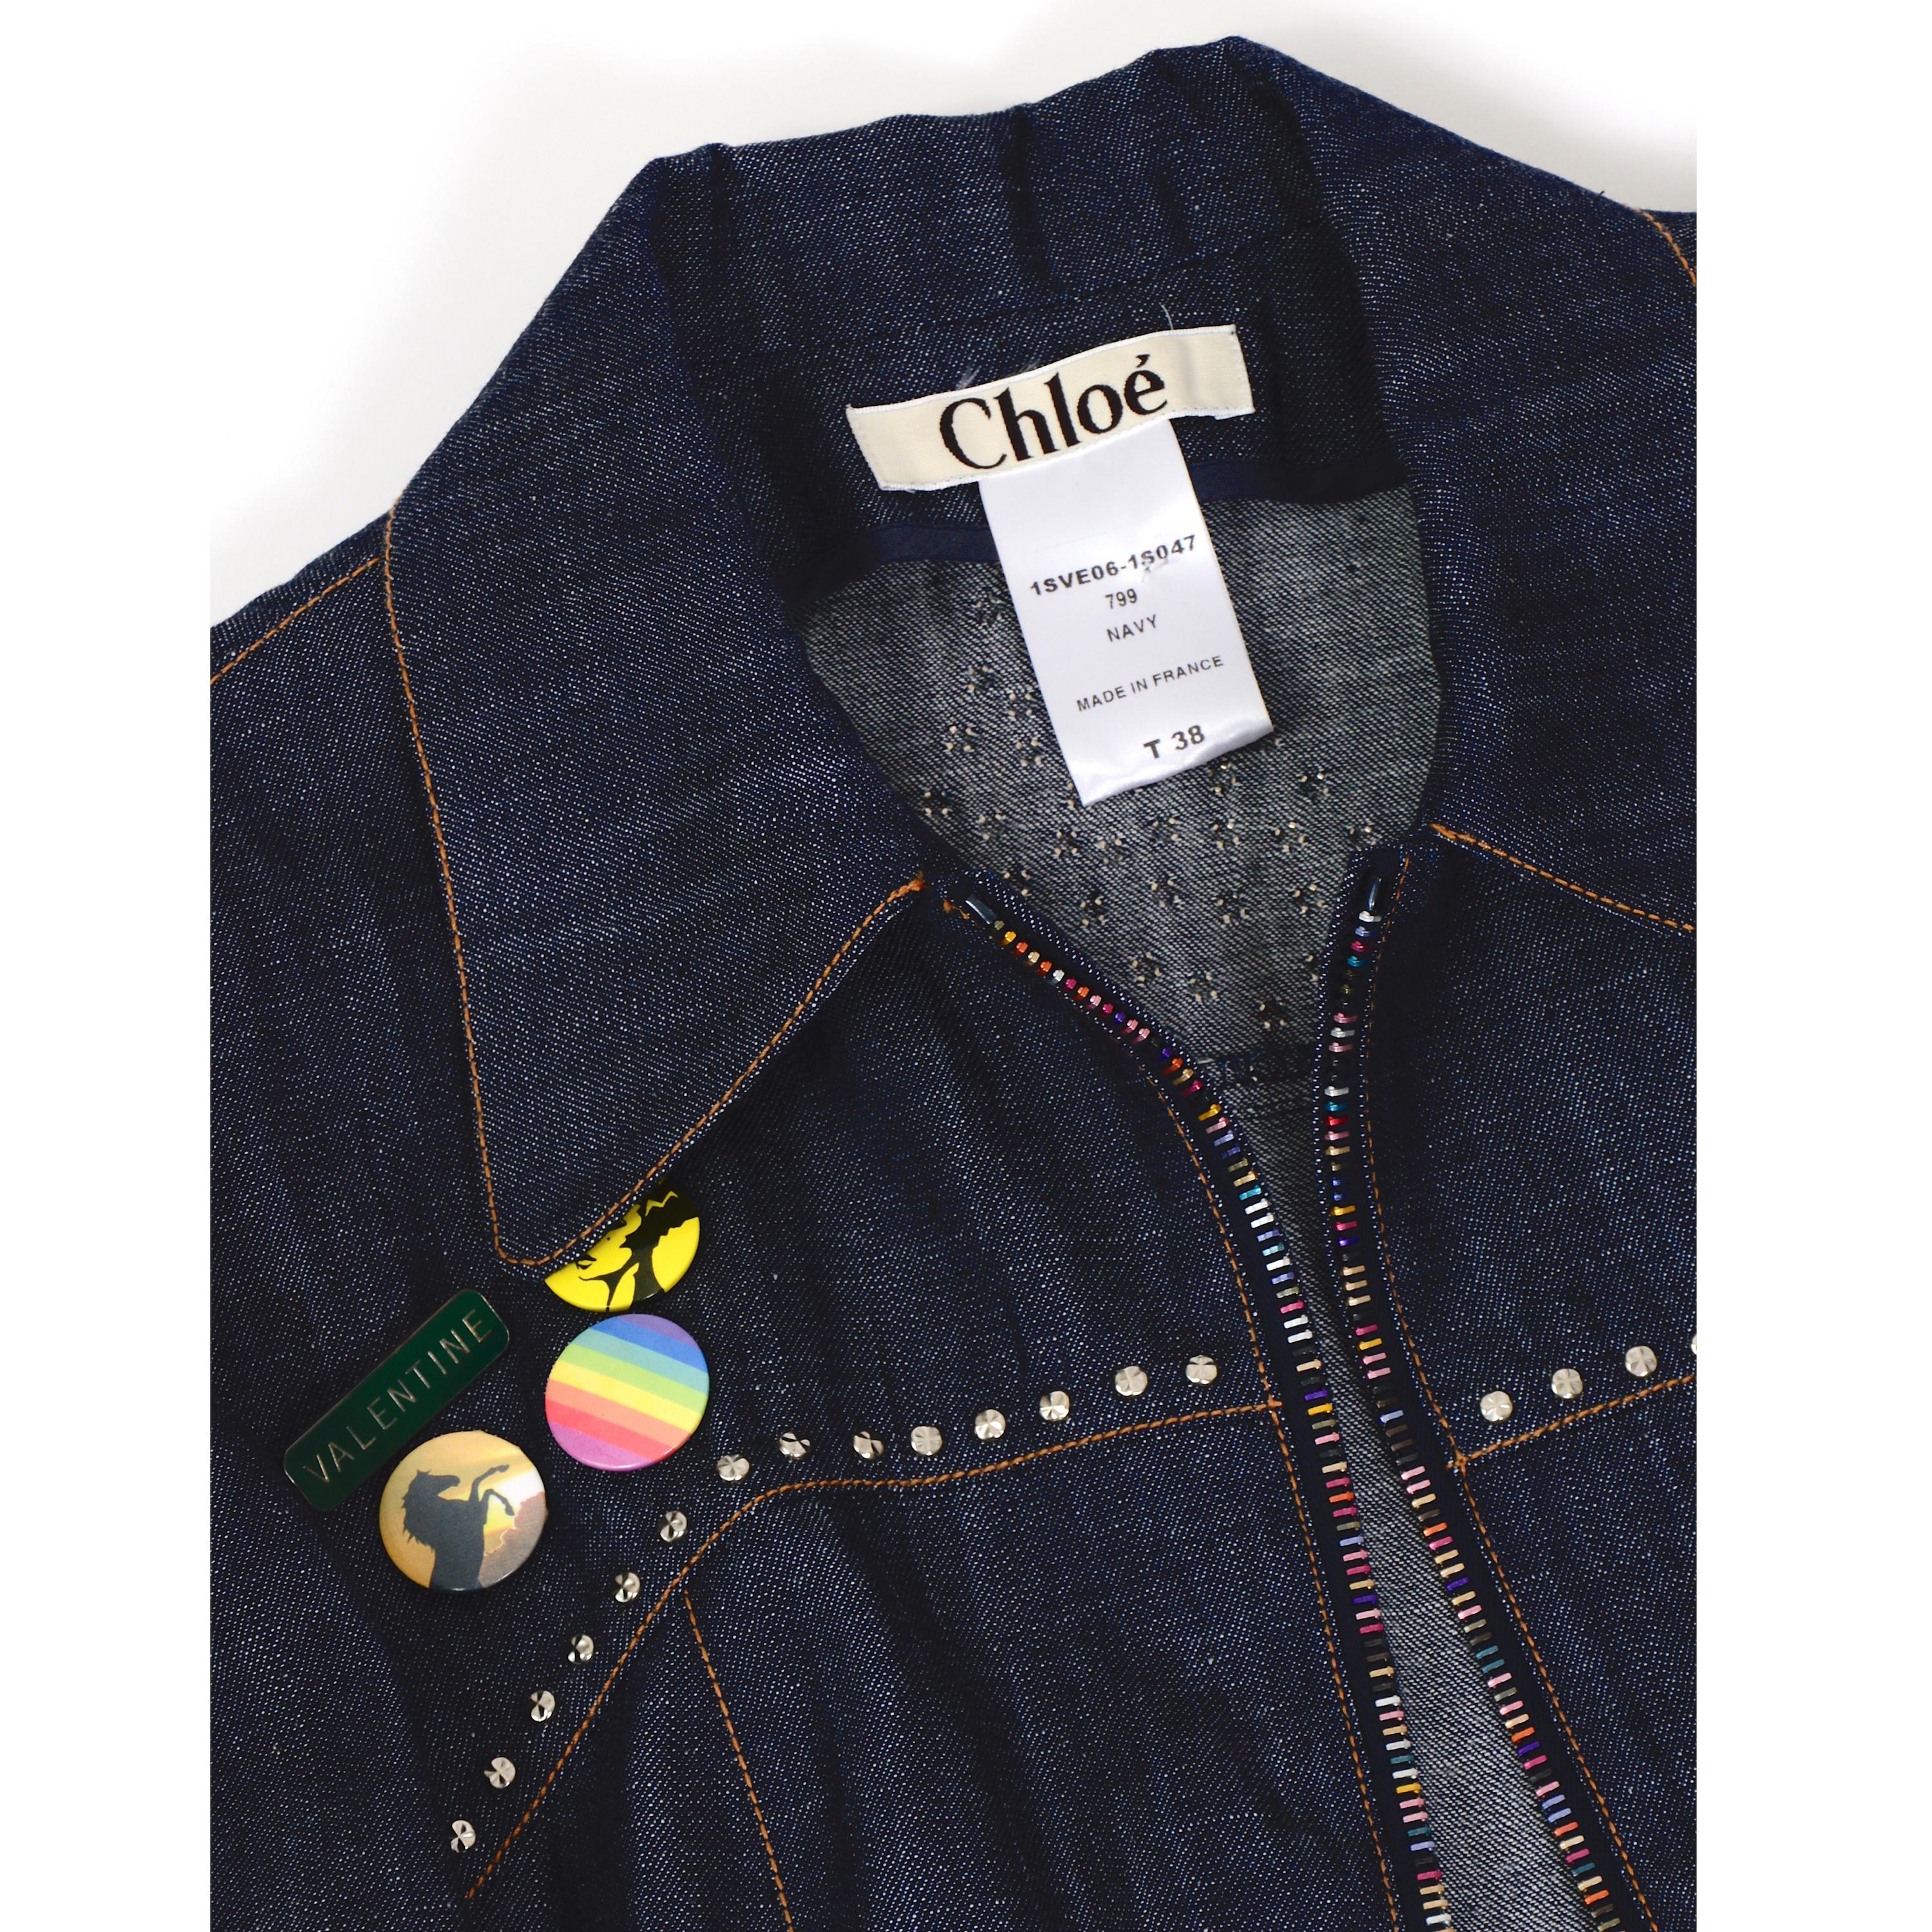 Chloé by Stella McCartney vintage 2001 denim jacket and skirt set For Sale 7